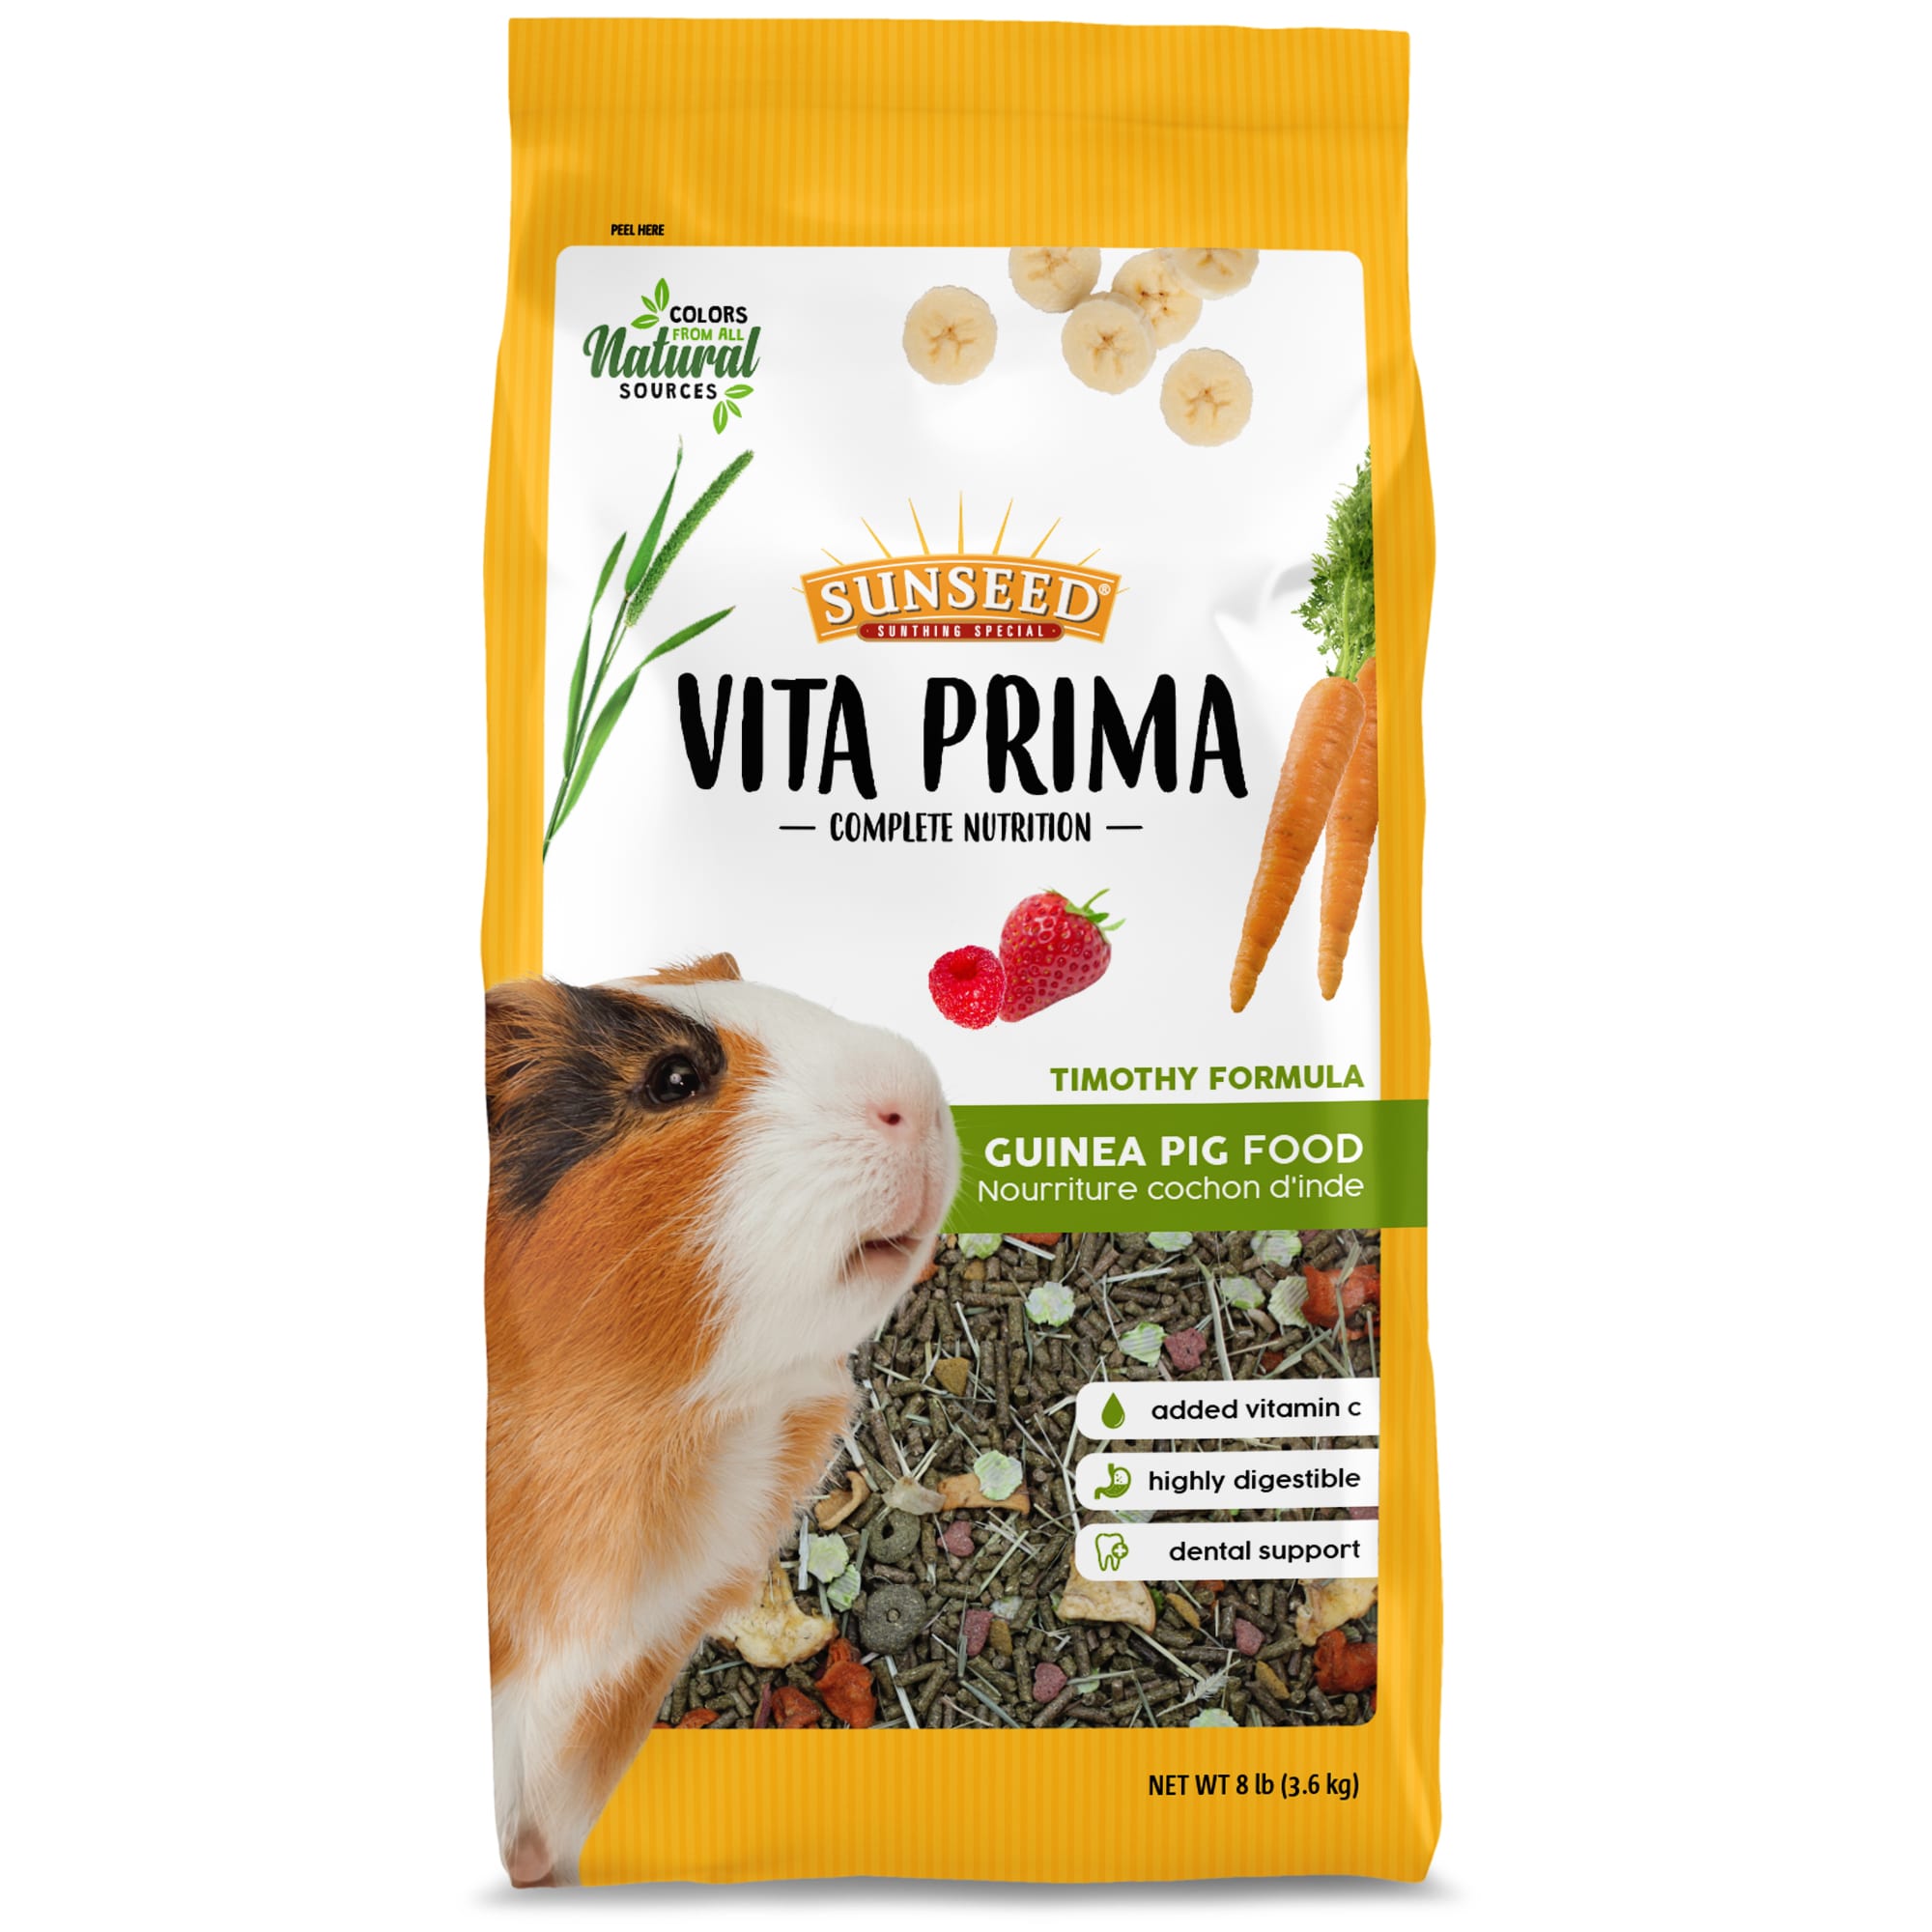 Sun Seed Vita Prima Guinea Pig Food, 8 